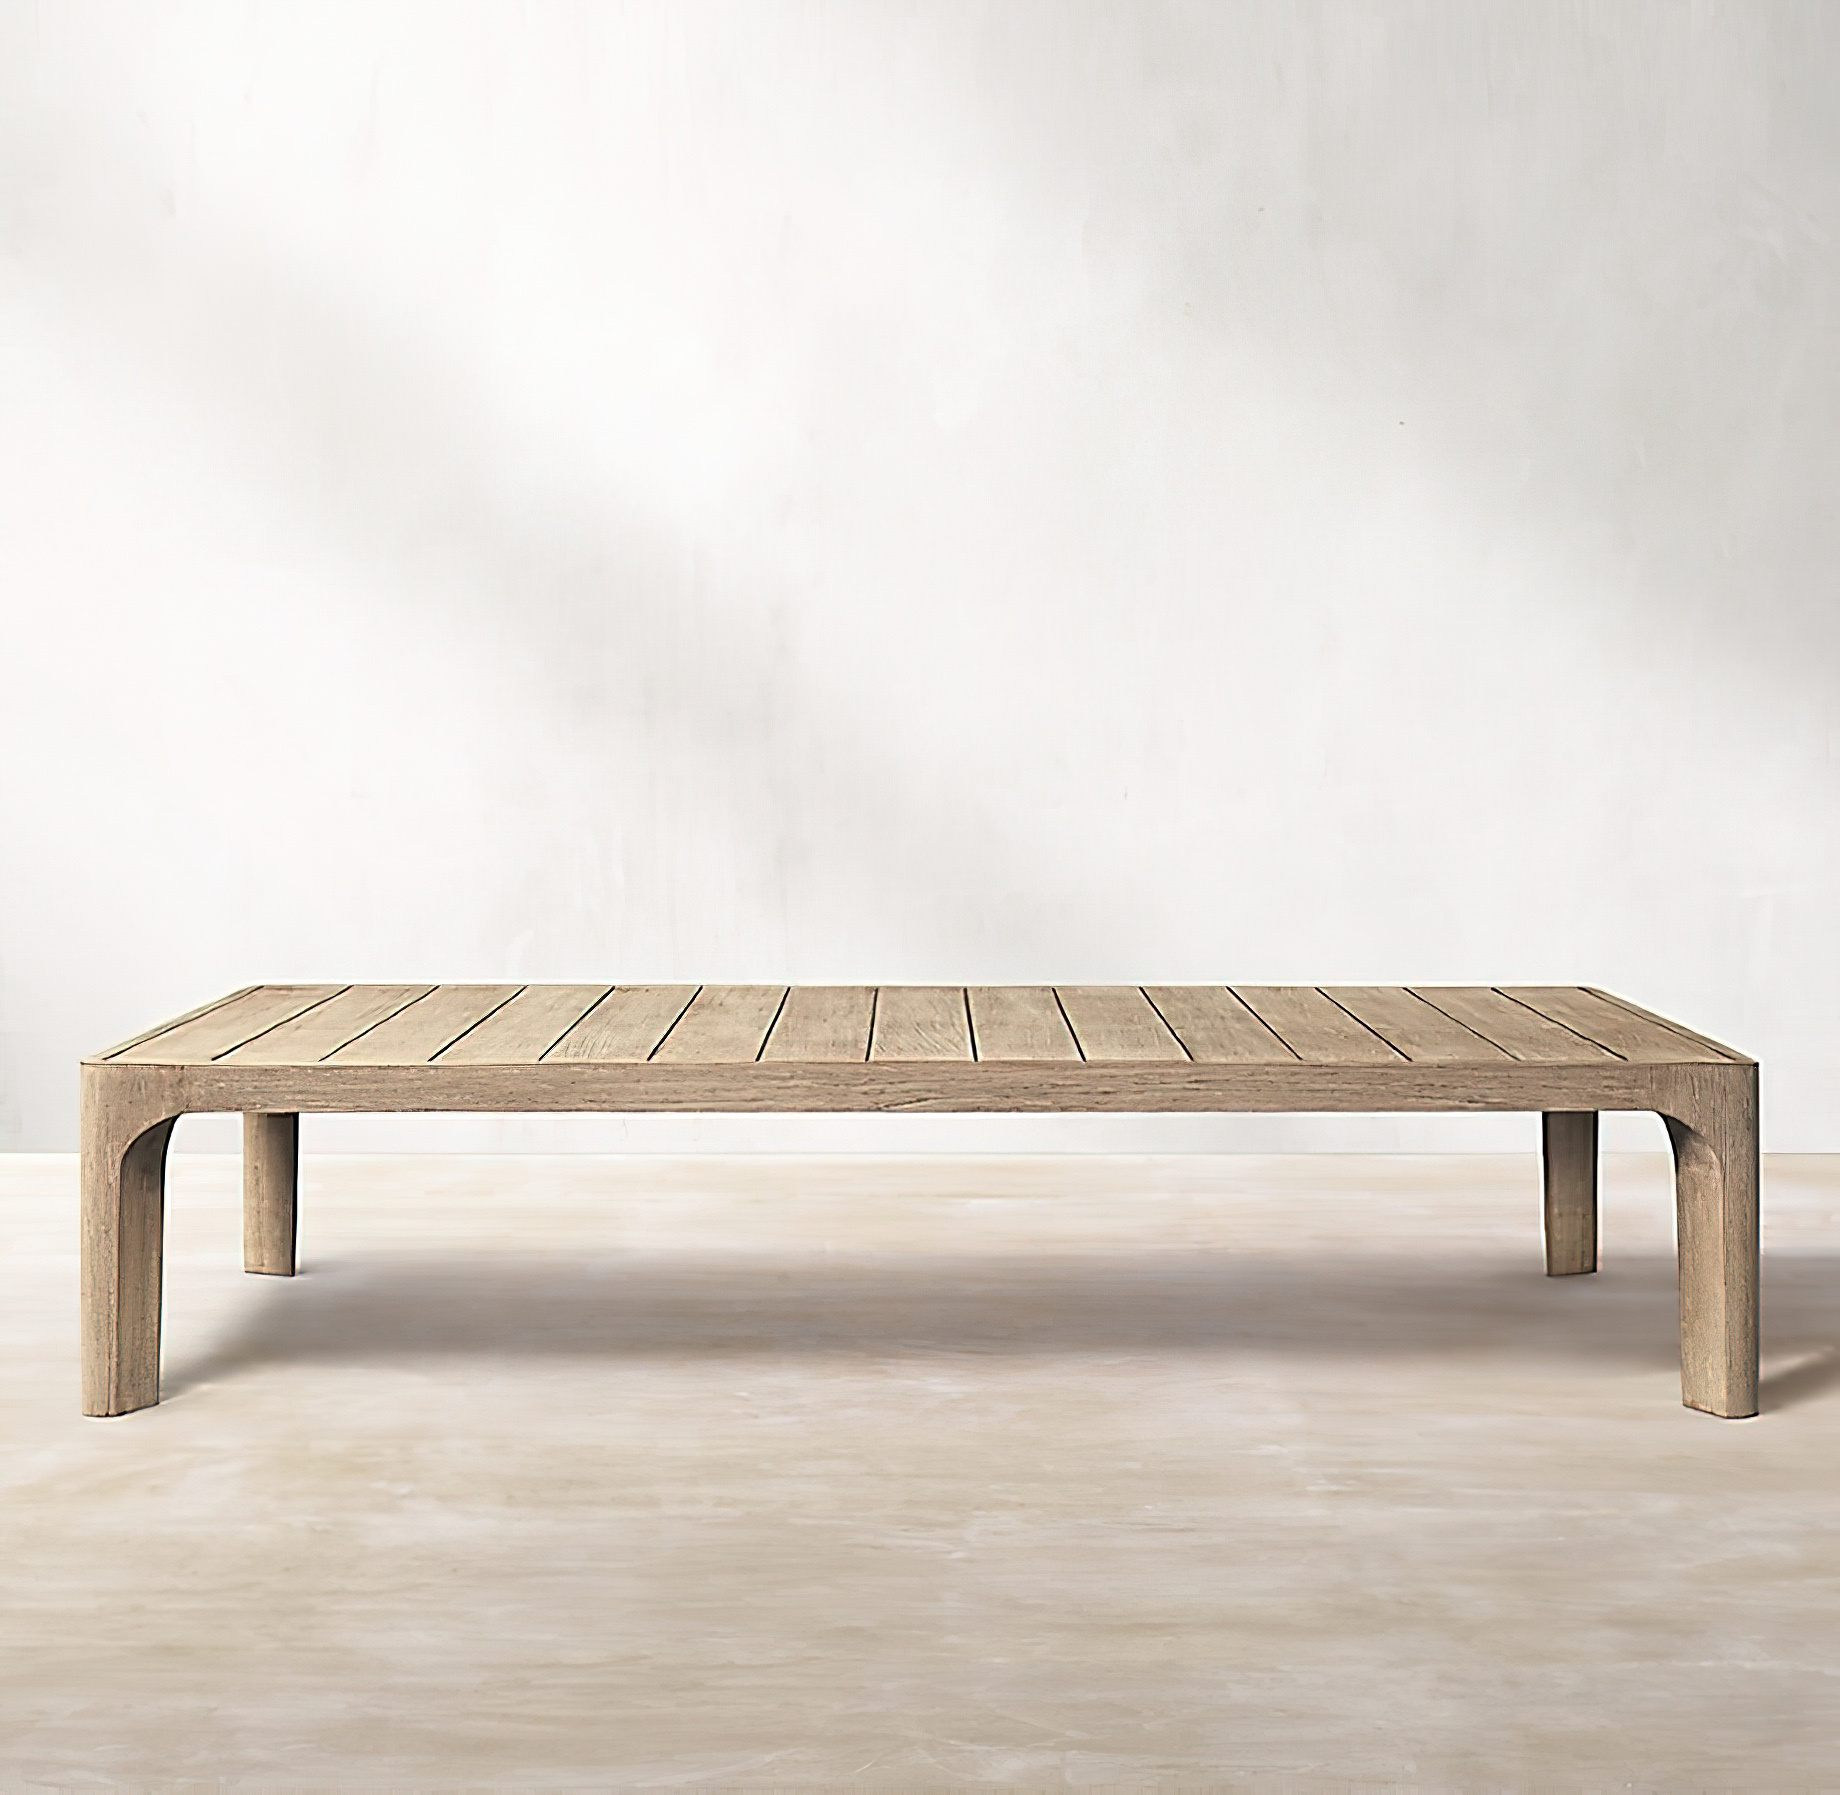 Malta Teak Collection Outdoor Furniture Design for RH – Ramon Esteve – Malta Teak Coffee Table